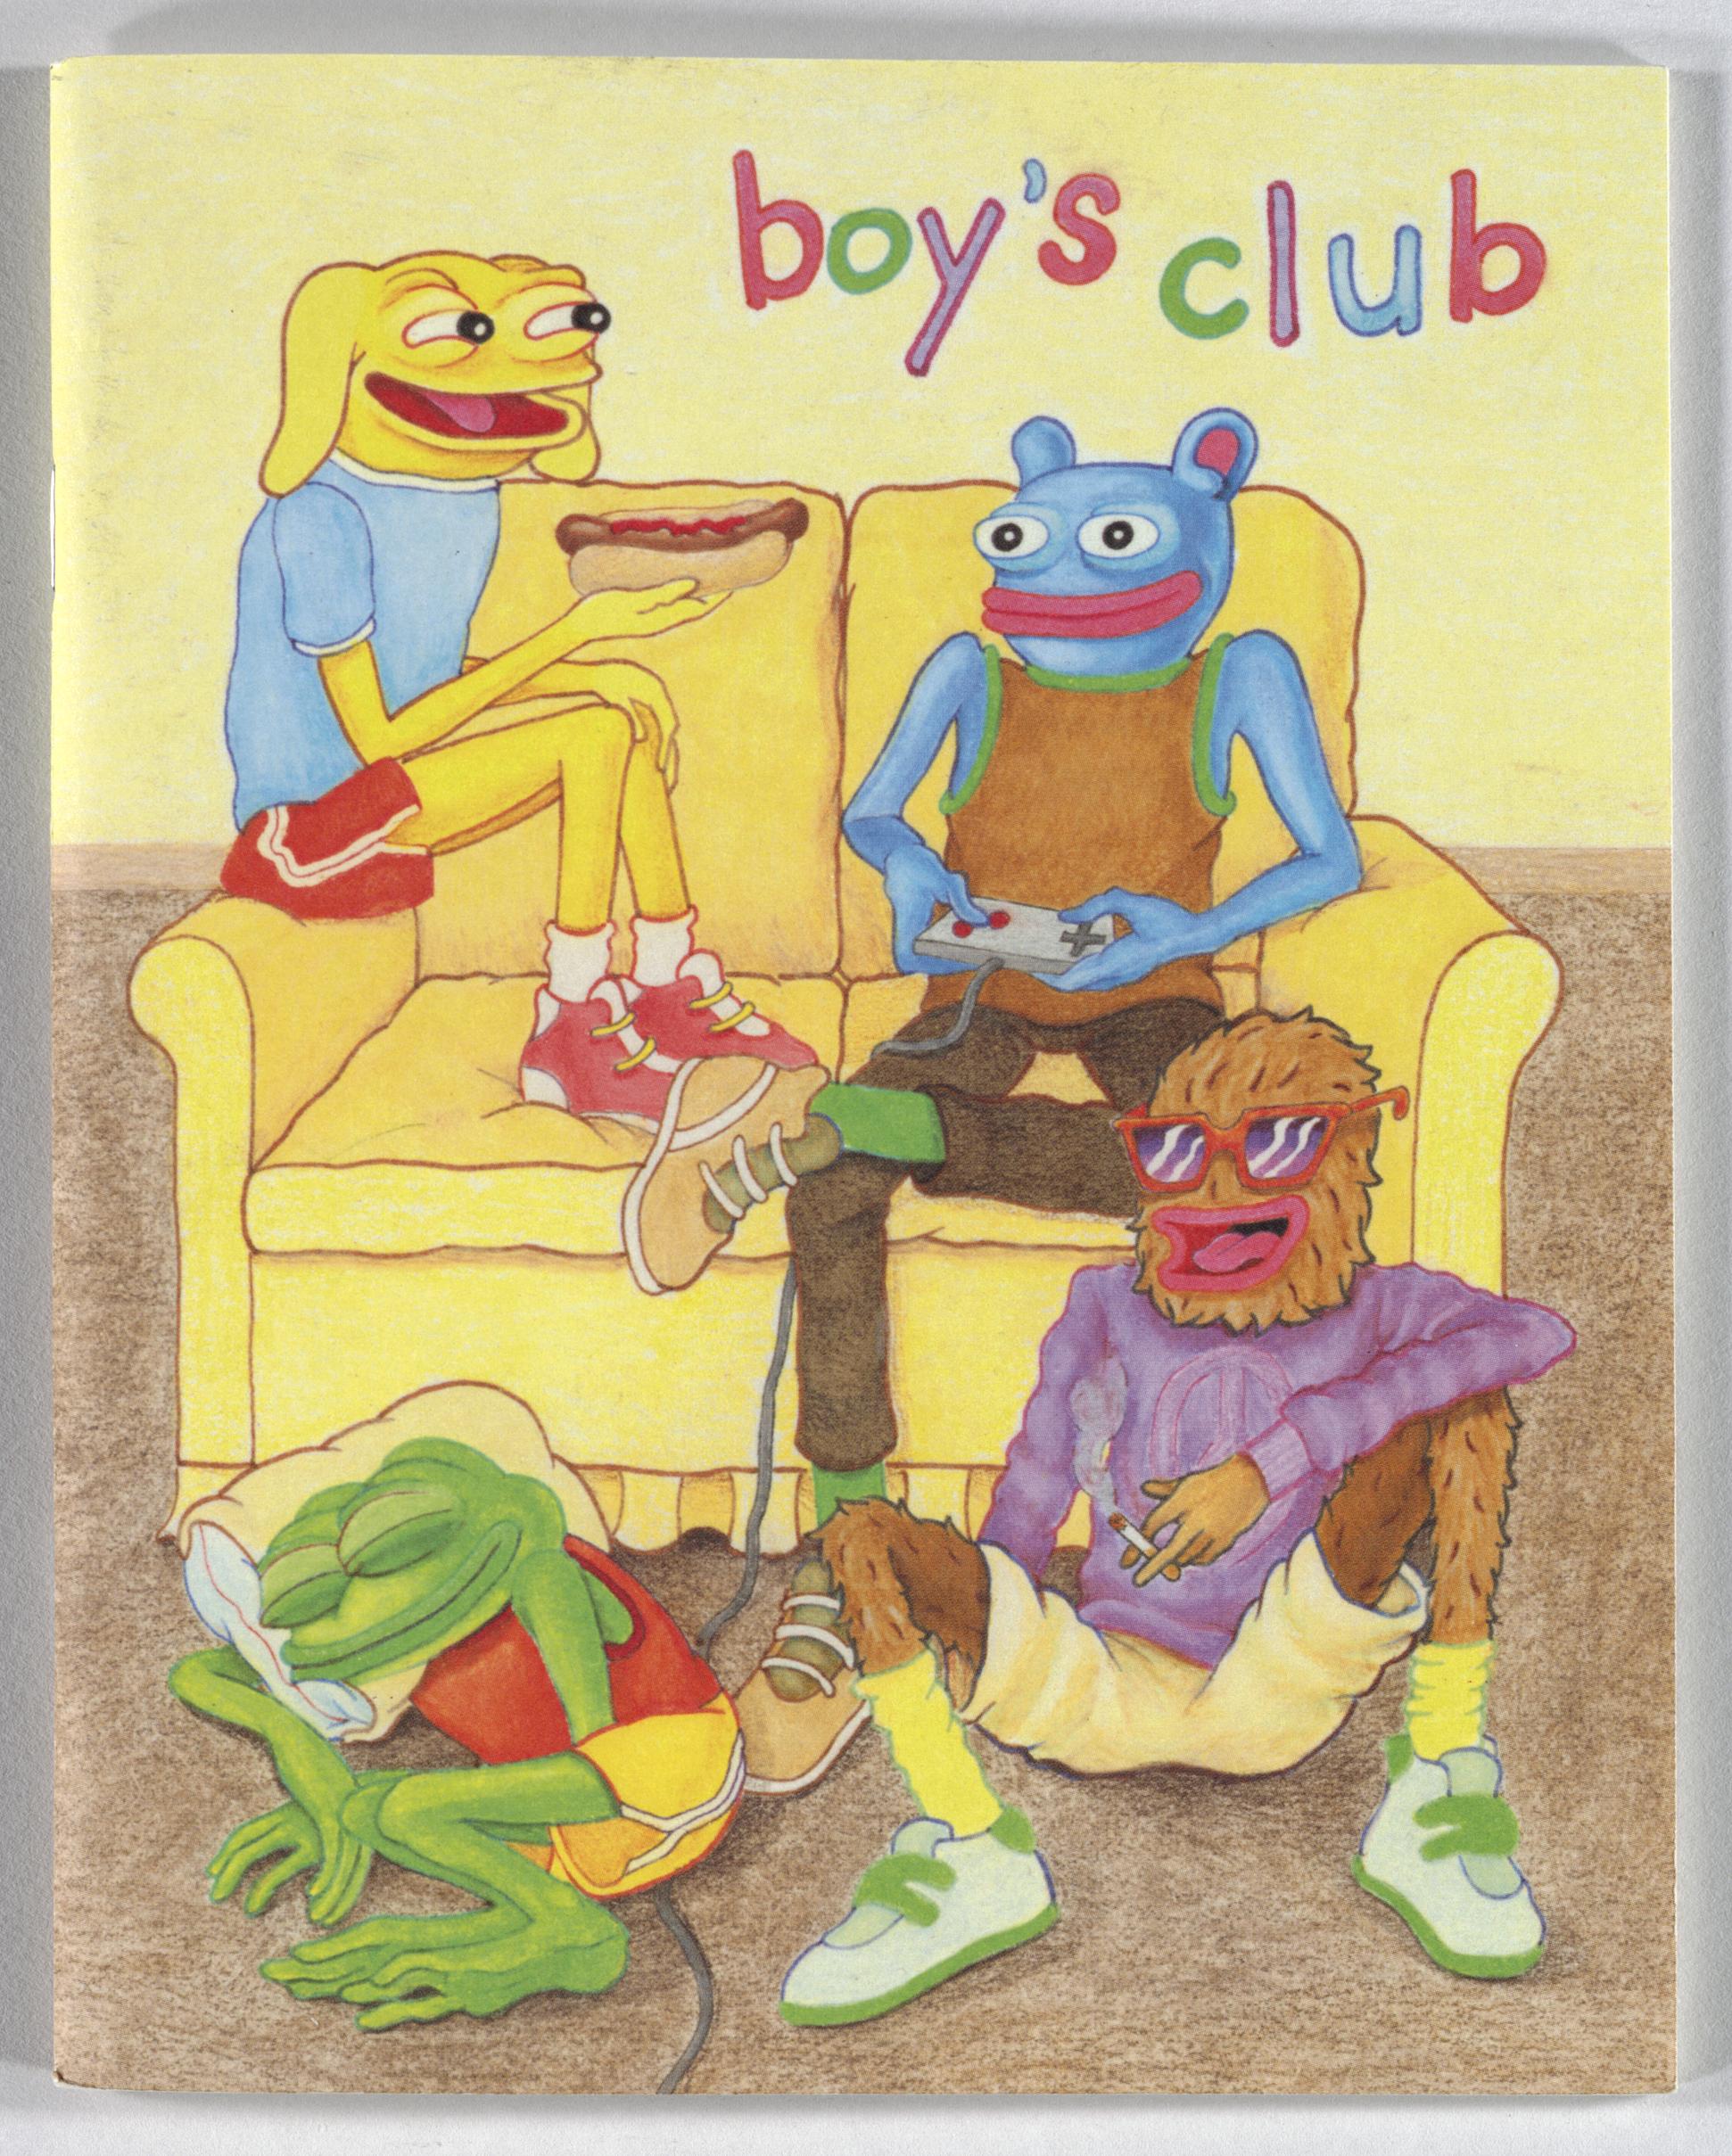 Boy's club (1 of 4) - UWDC - UW-Madison Libraries